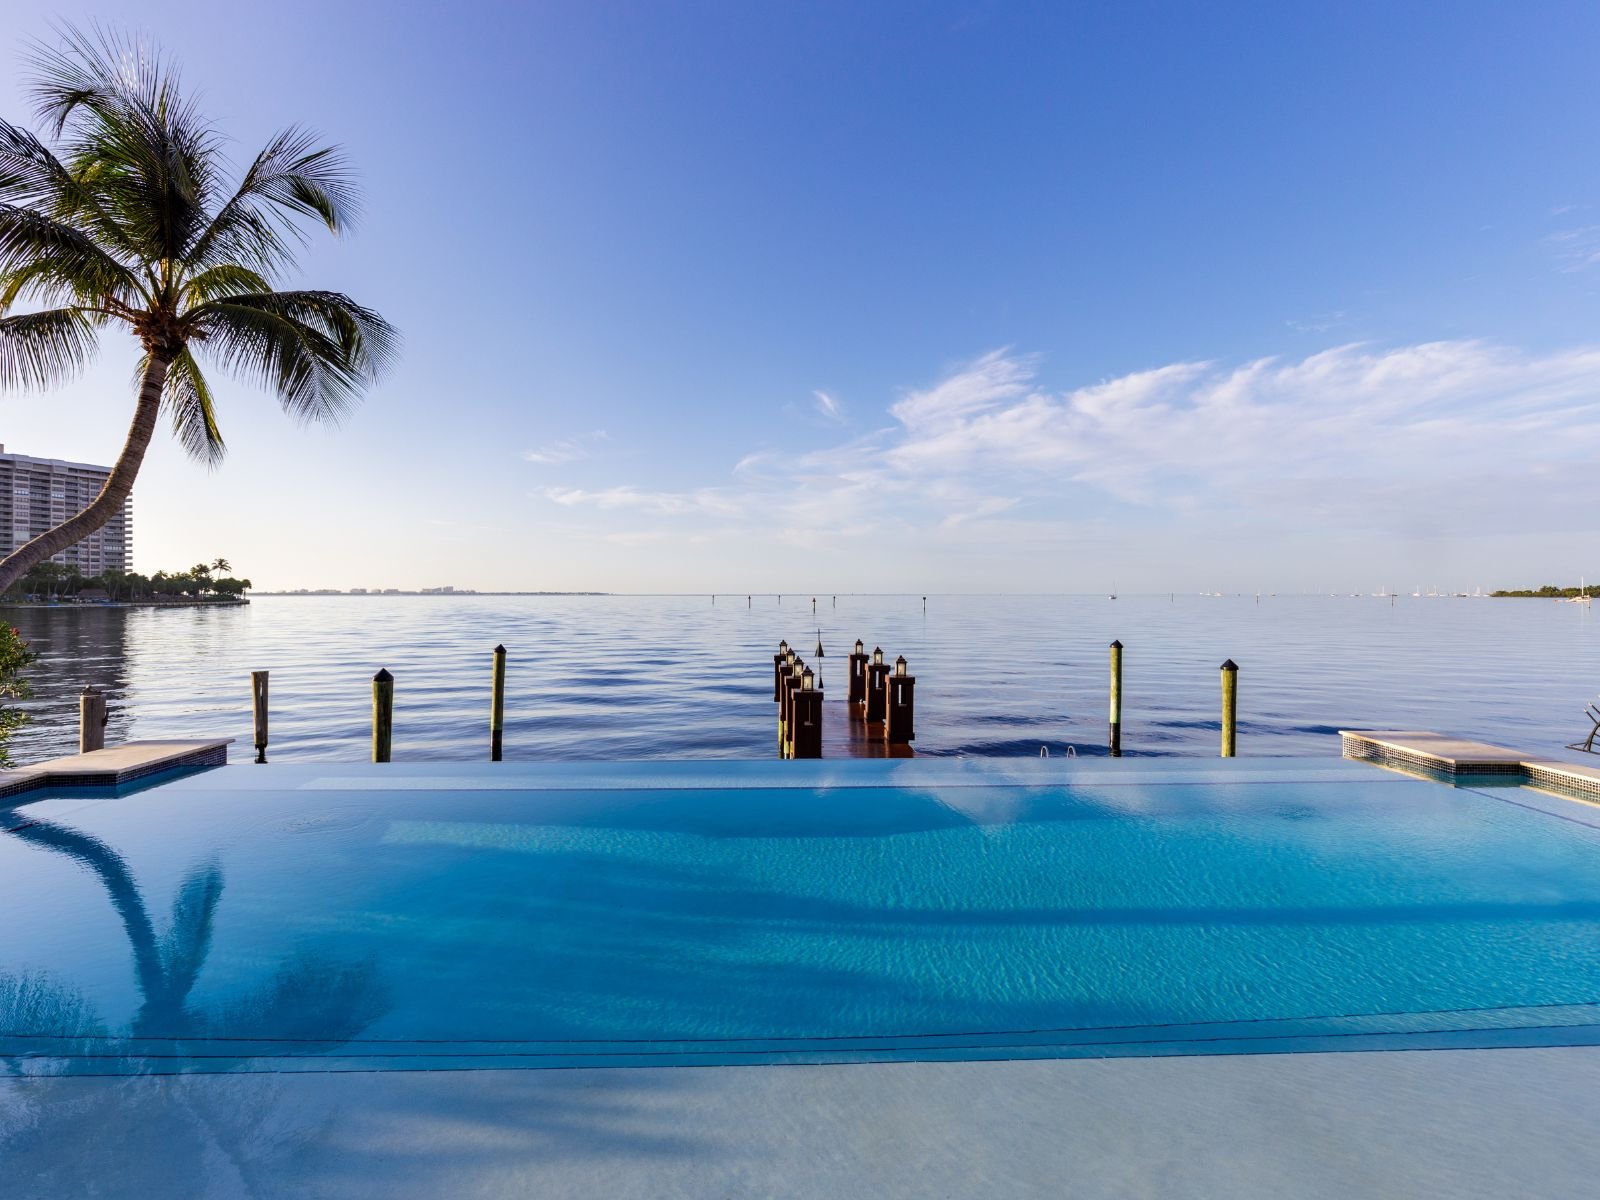 Master Brokers Forum Listing: Step Inside This $25 Million Coconut Grove Waterfront Mediterranean Estate5.jpg